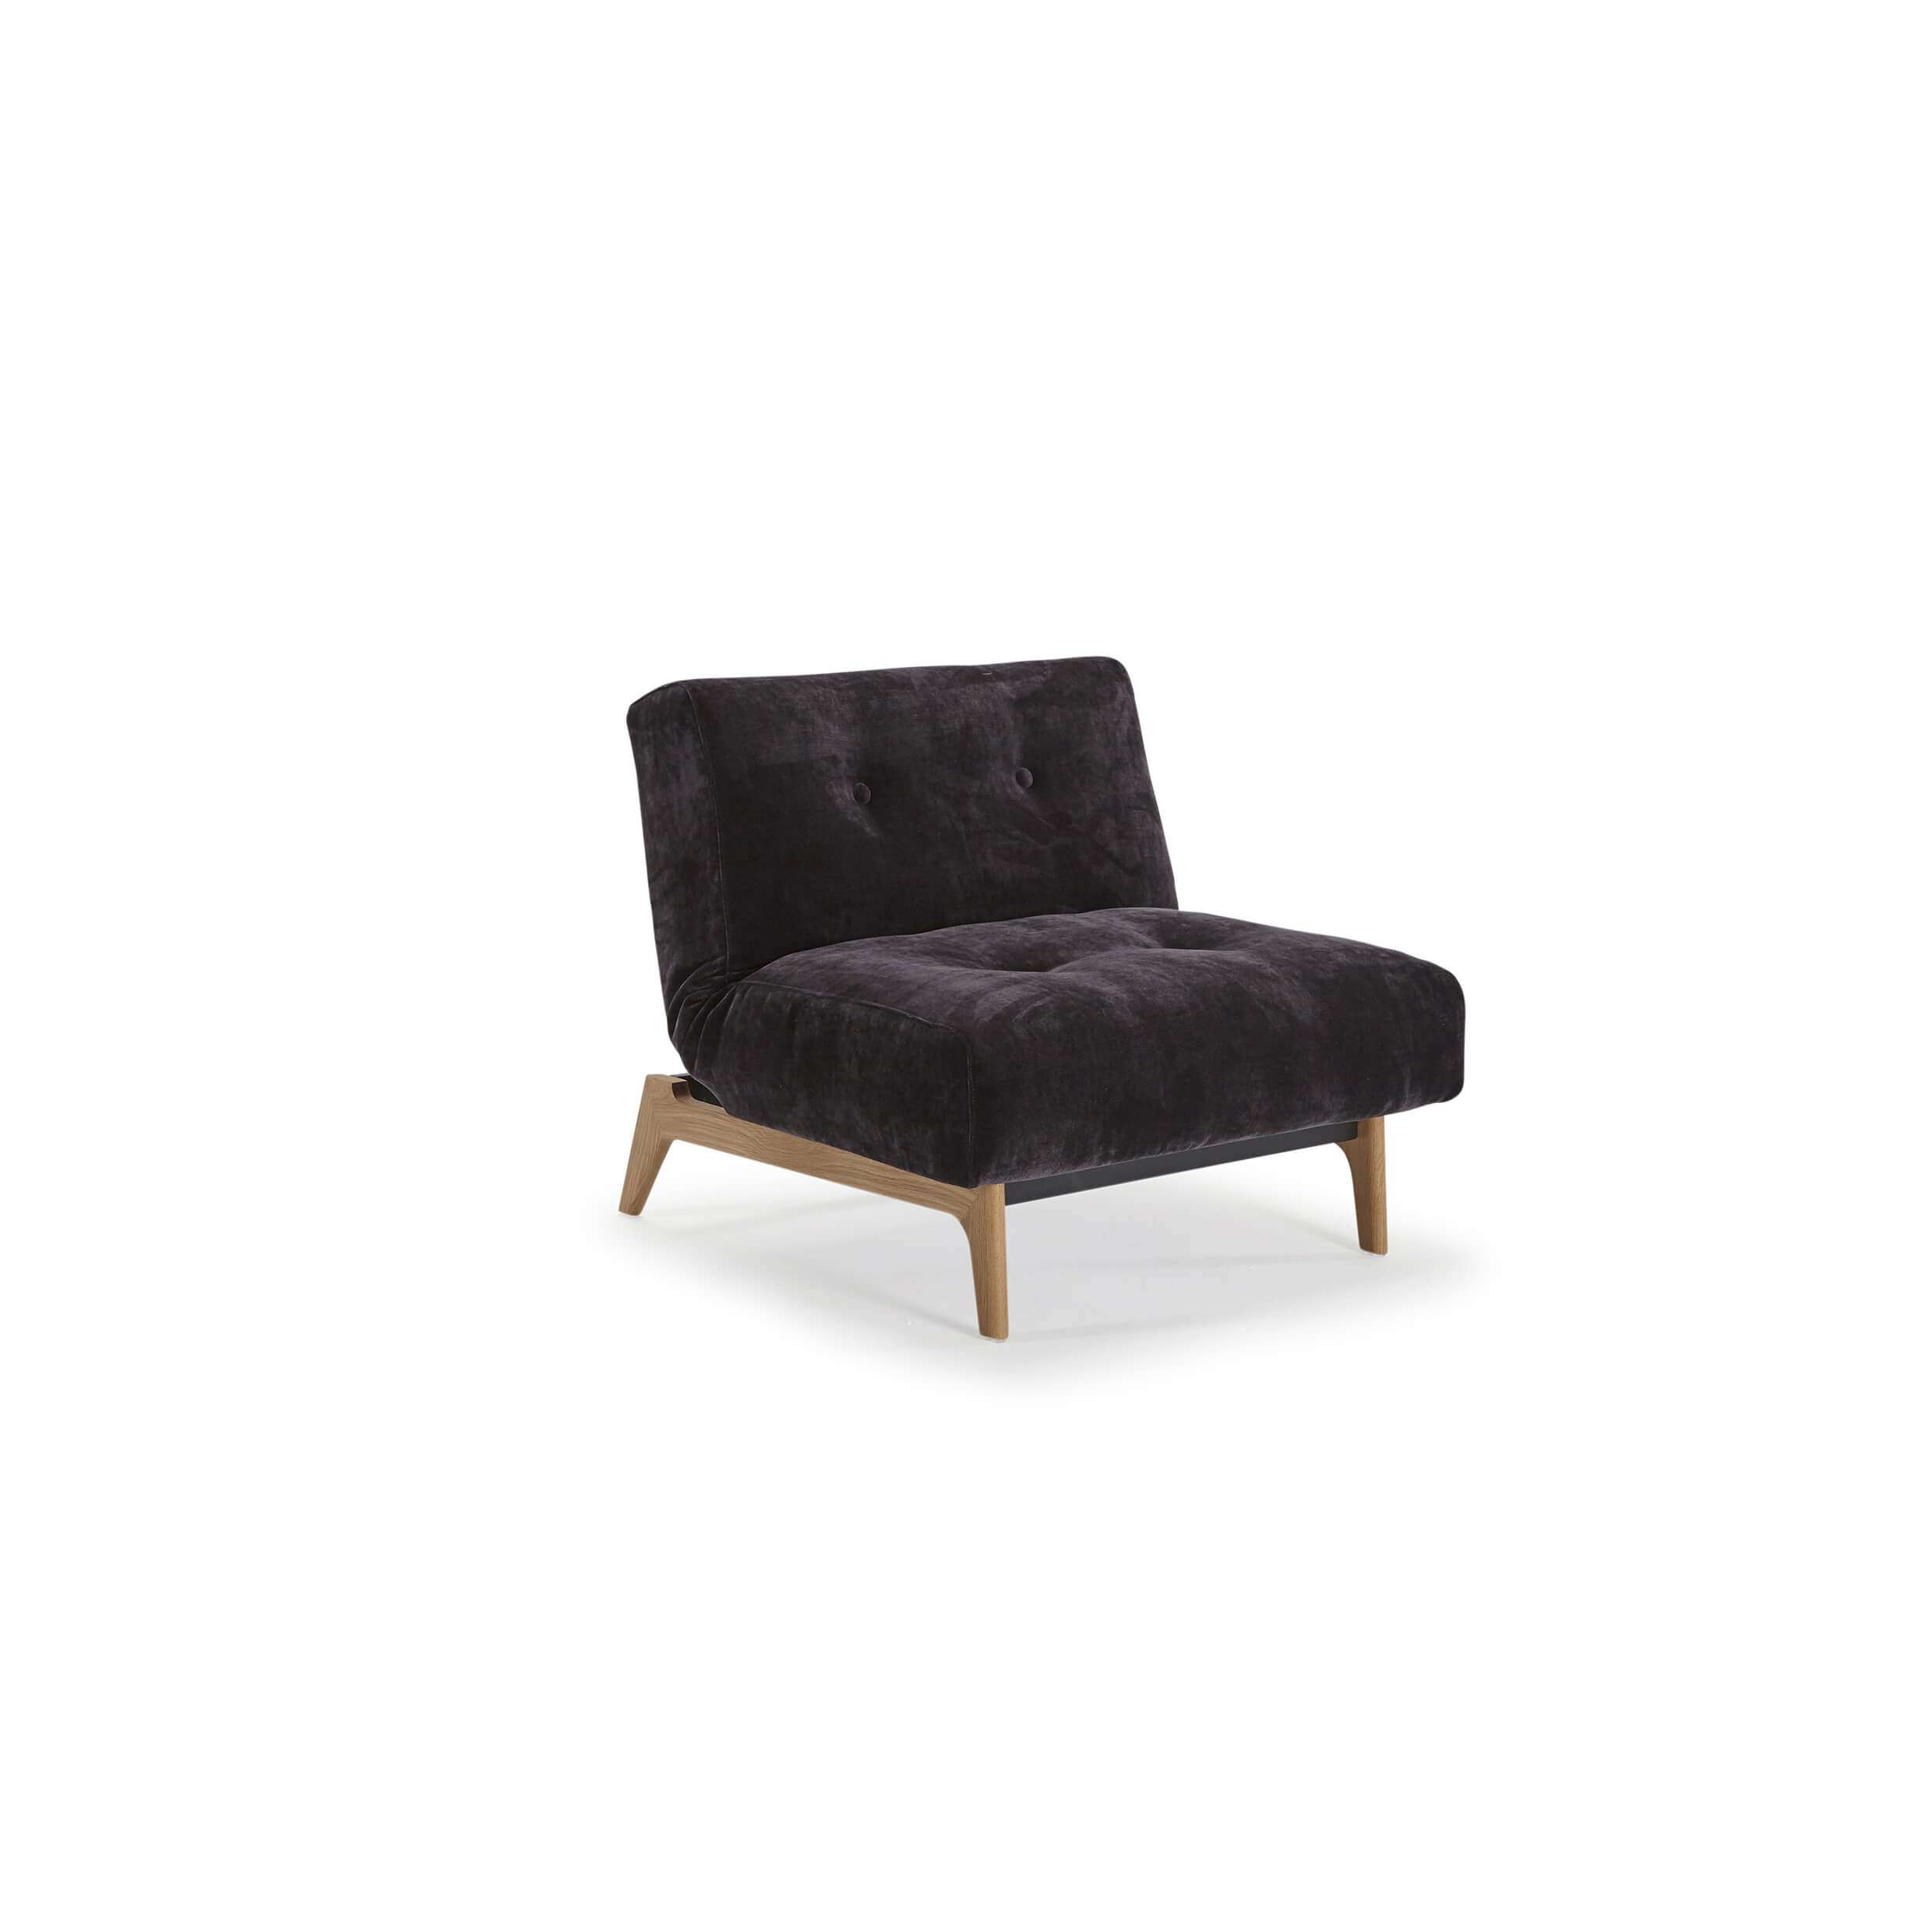 Convertible sofa bed sofa sleeper chair